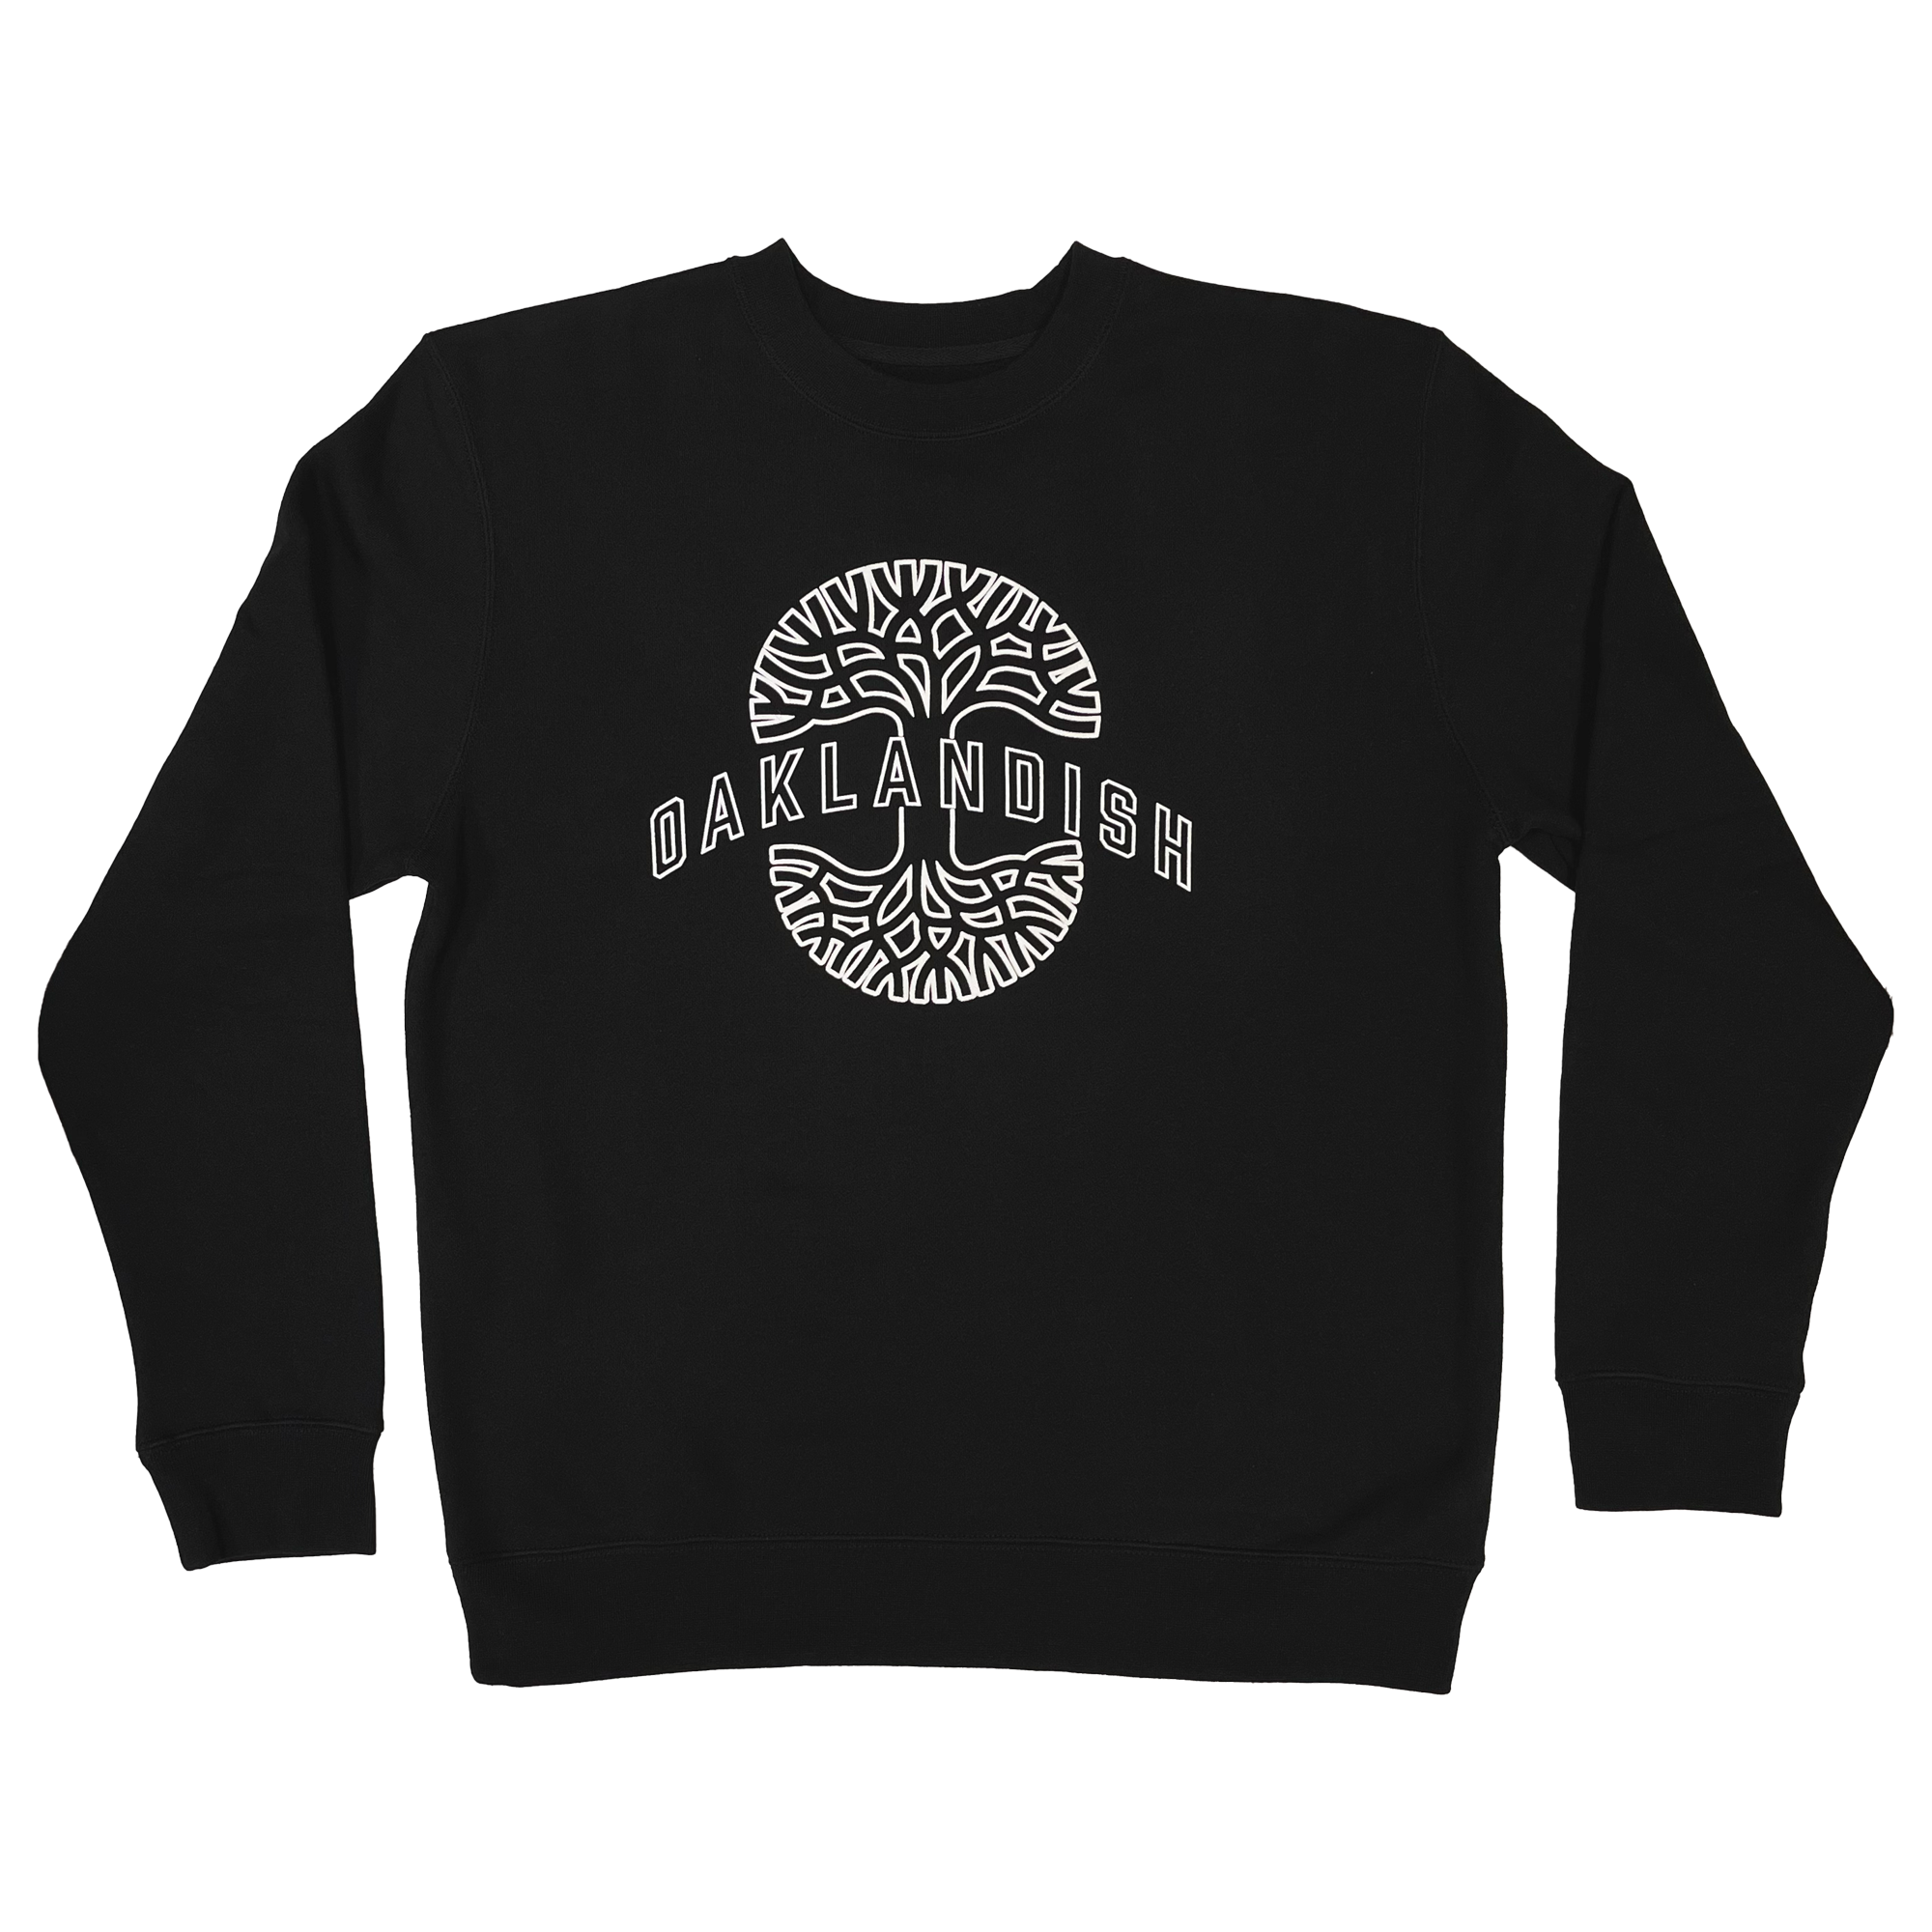 Front view of black crewneck sweatshirt with Oaklandish wordmark on top of Oaklandish tree logo in white puff ink.